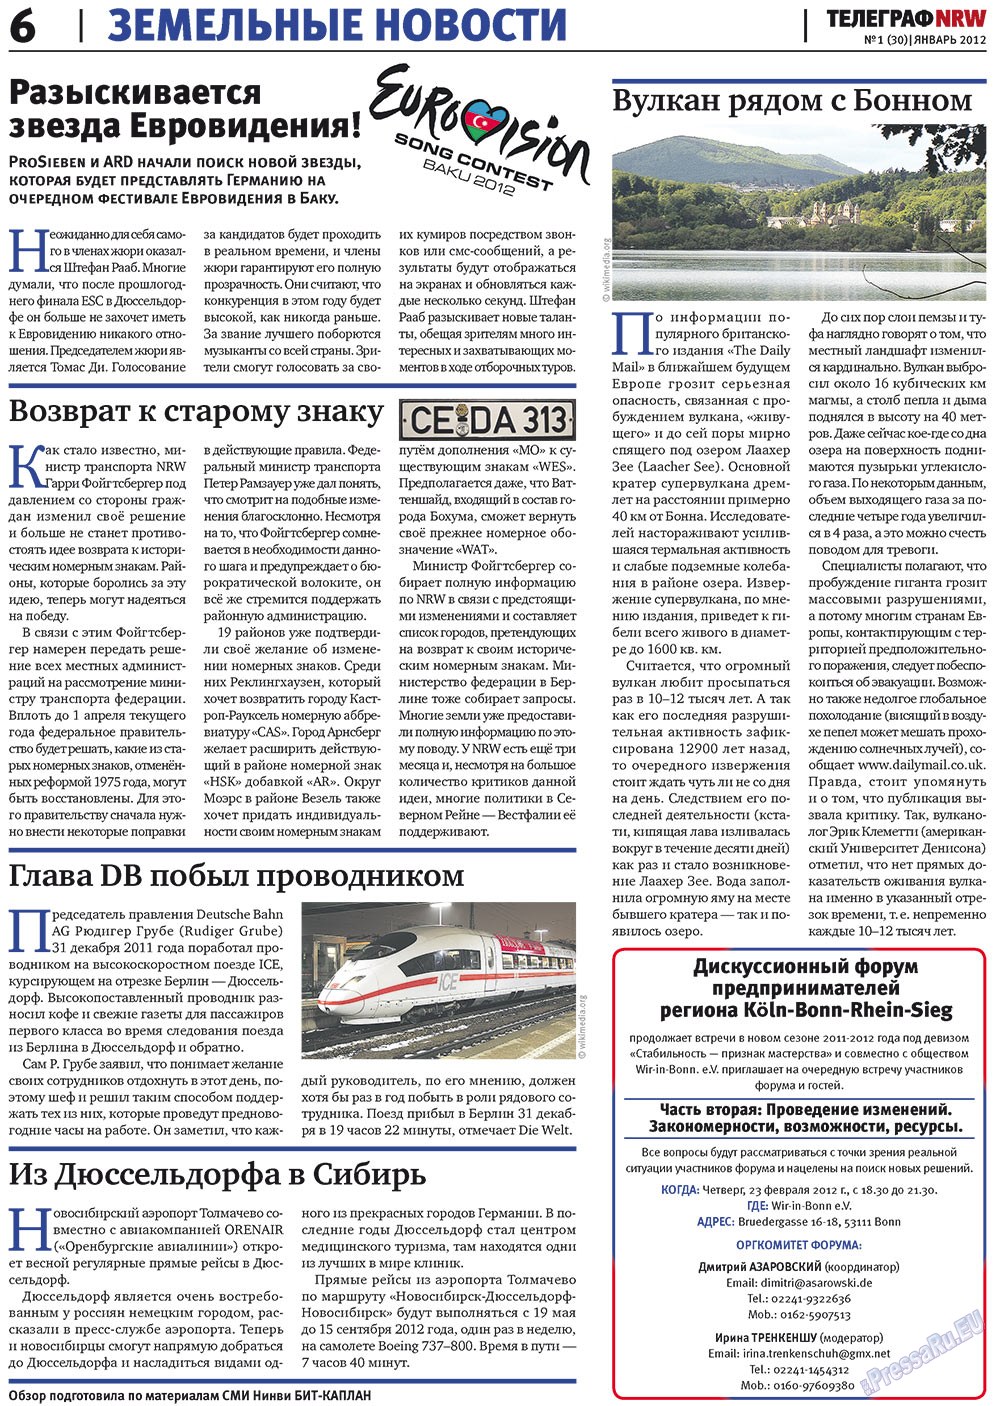 Телеграф NRW, газета. 2012 №1 стр.6